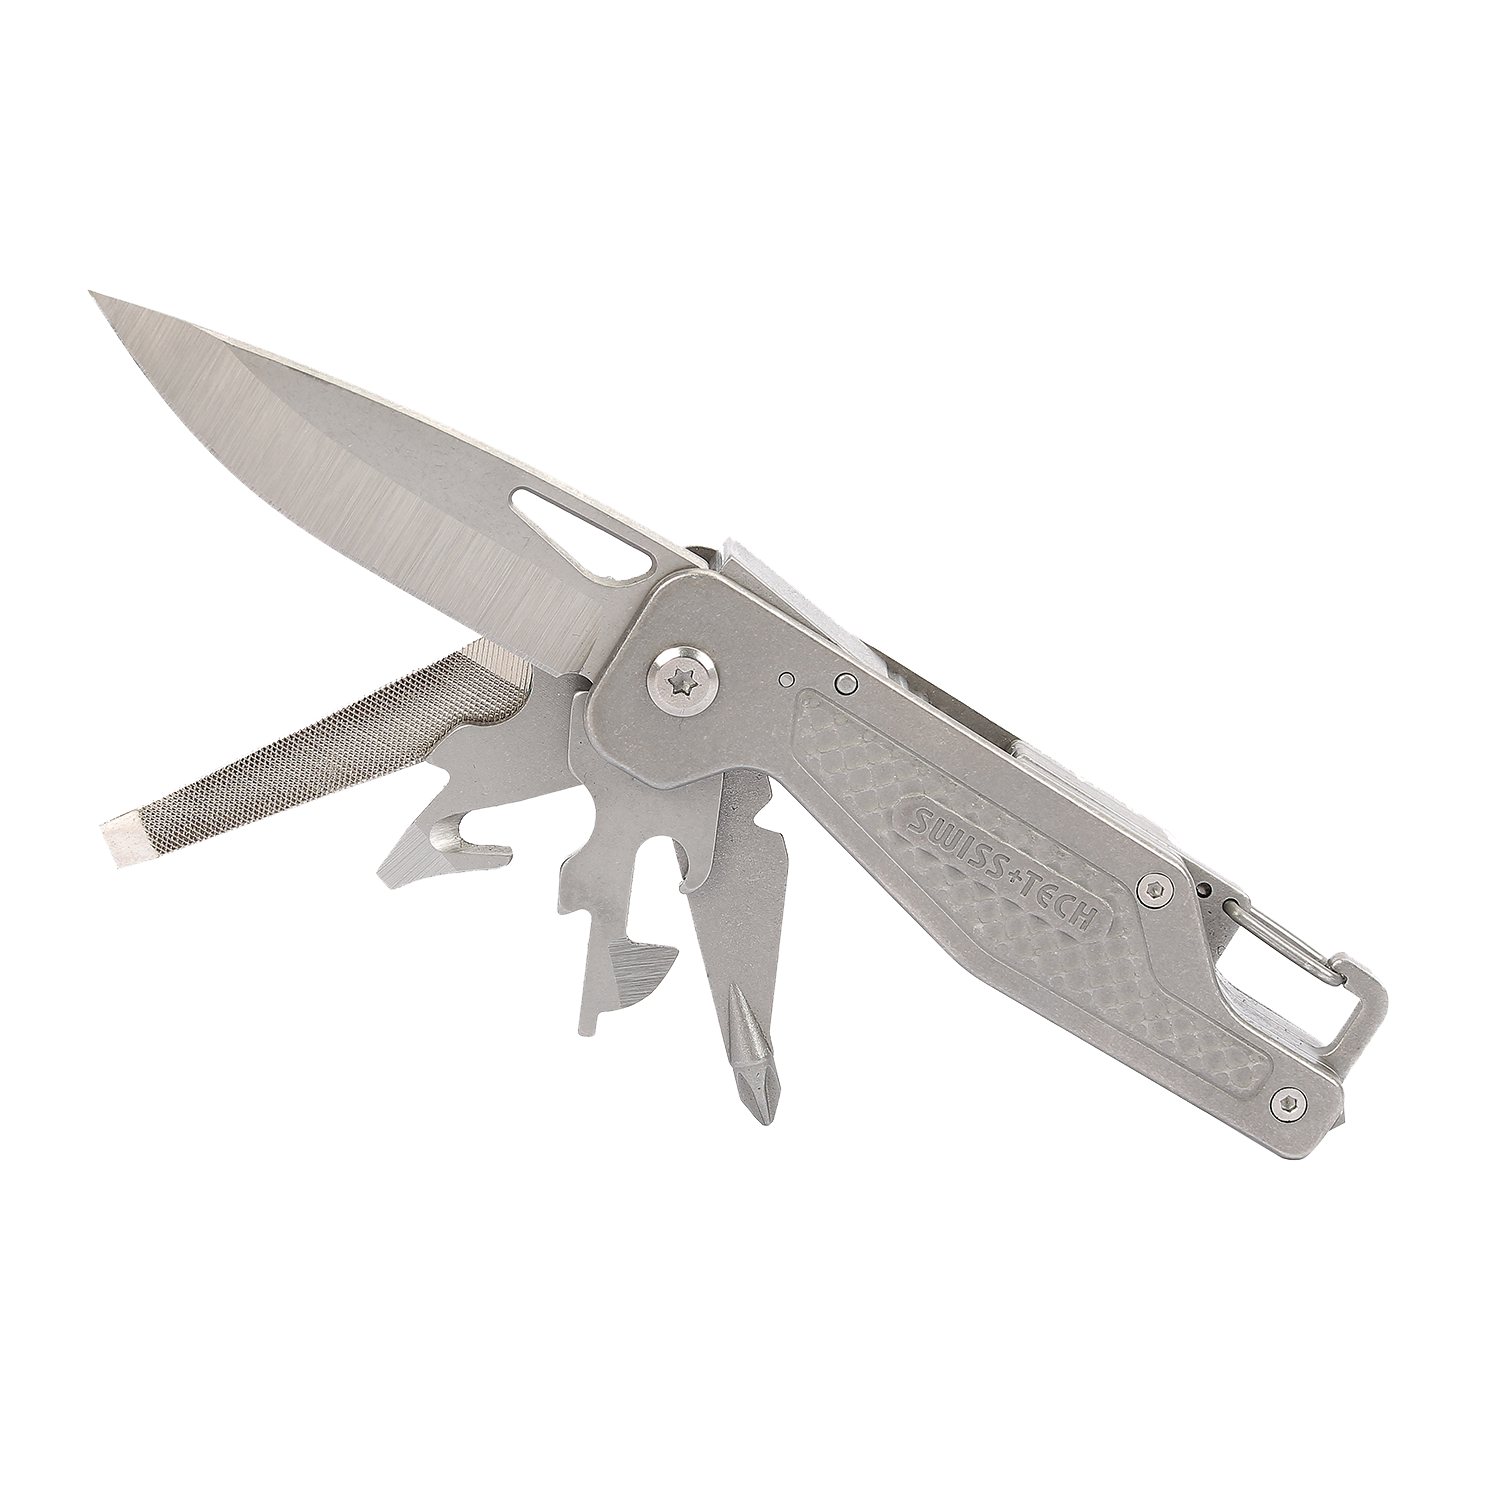 SWISS + TECH Multi-tool Multi-function knife 13-IN-1 Silver NEW from Japan